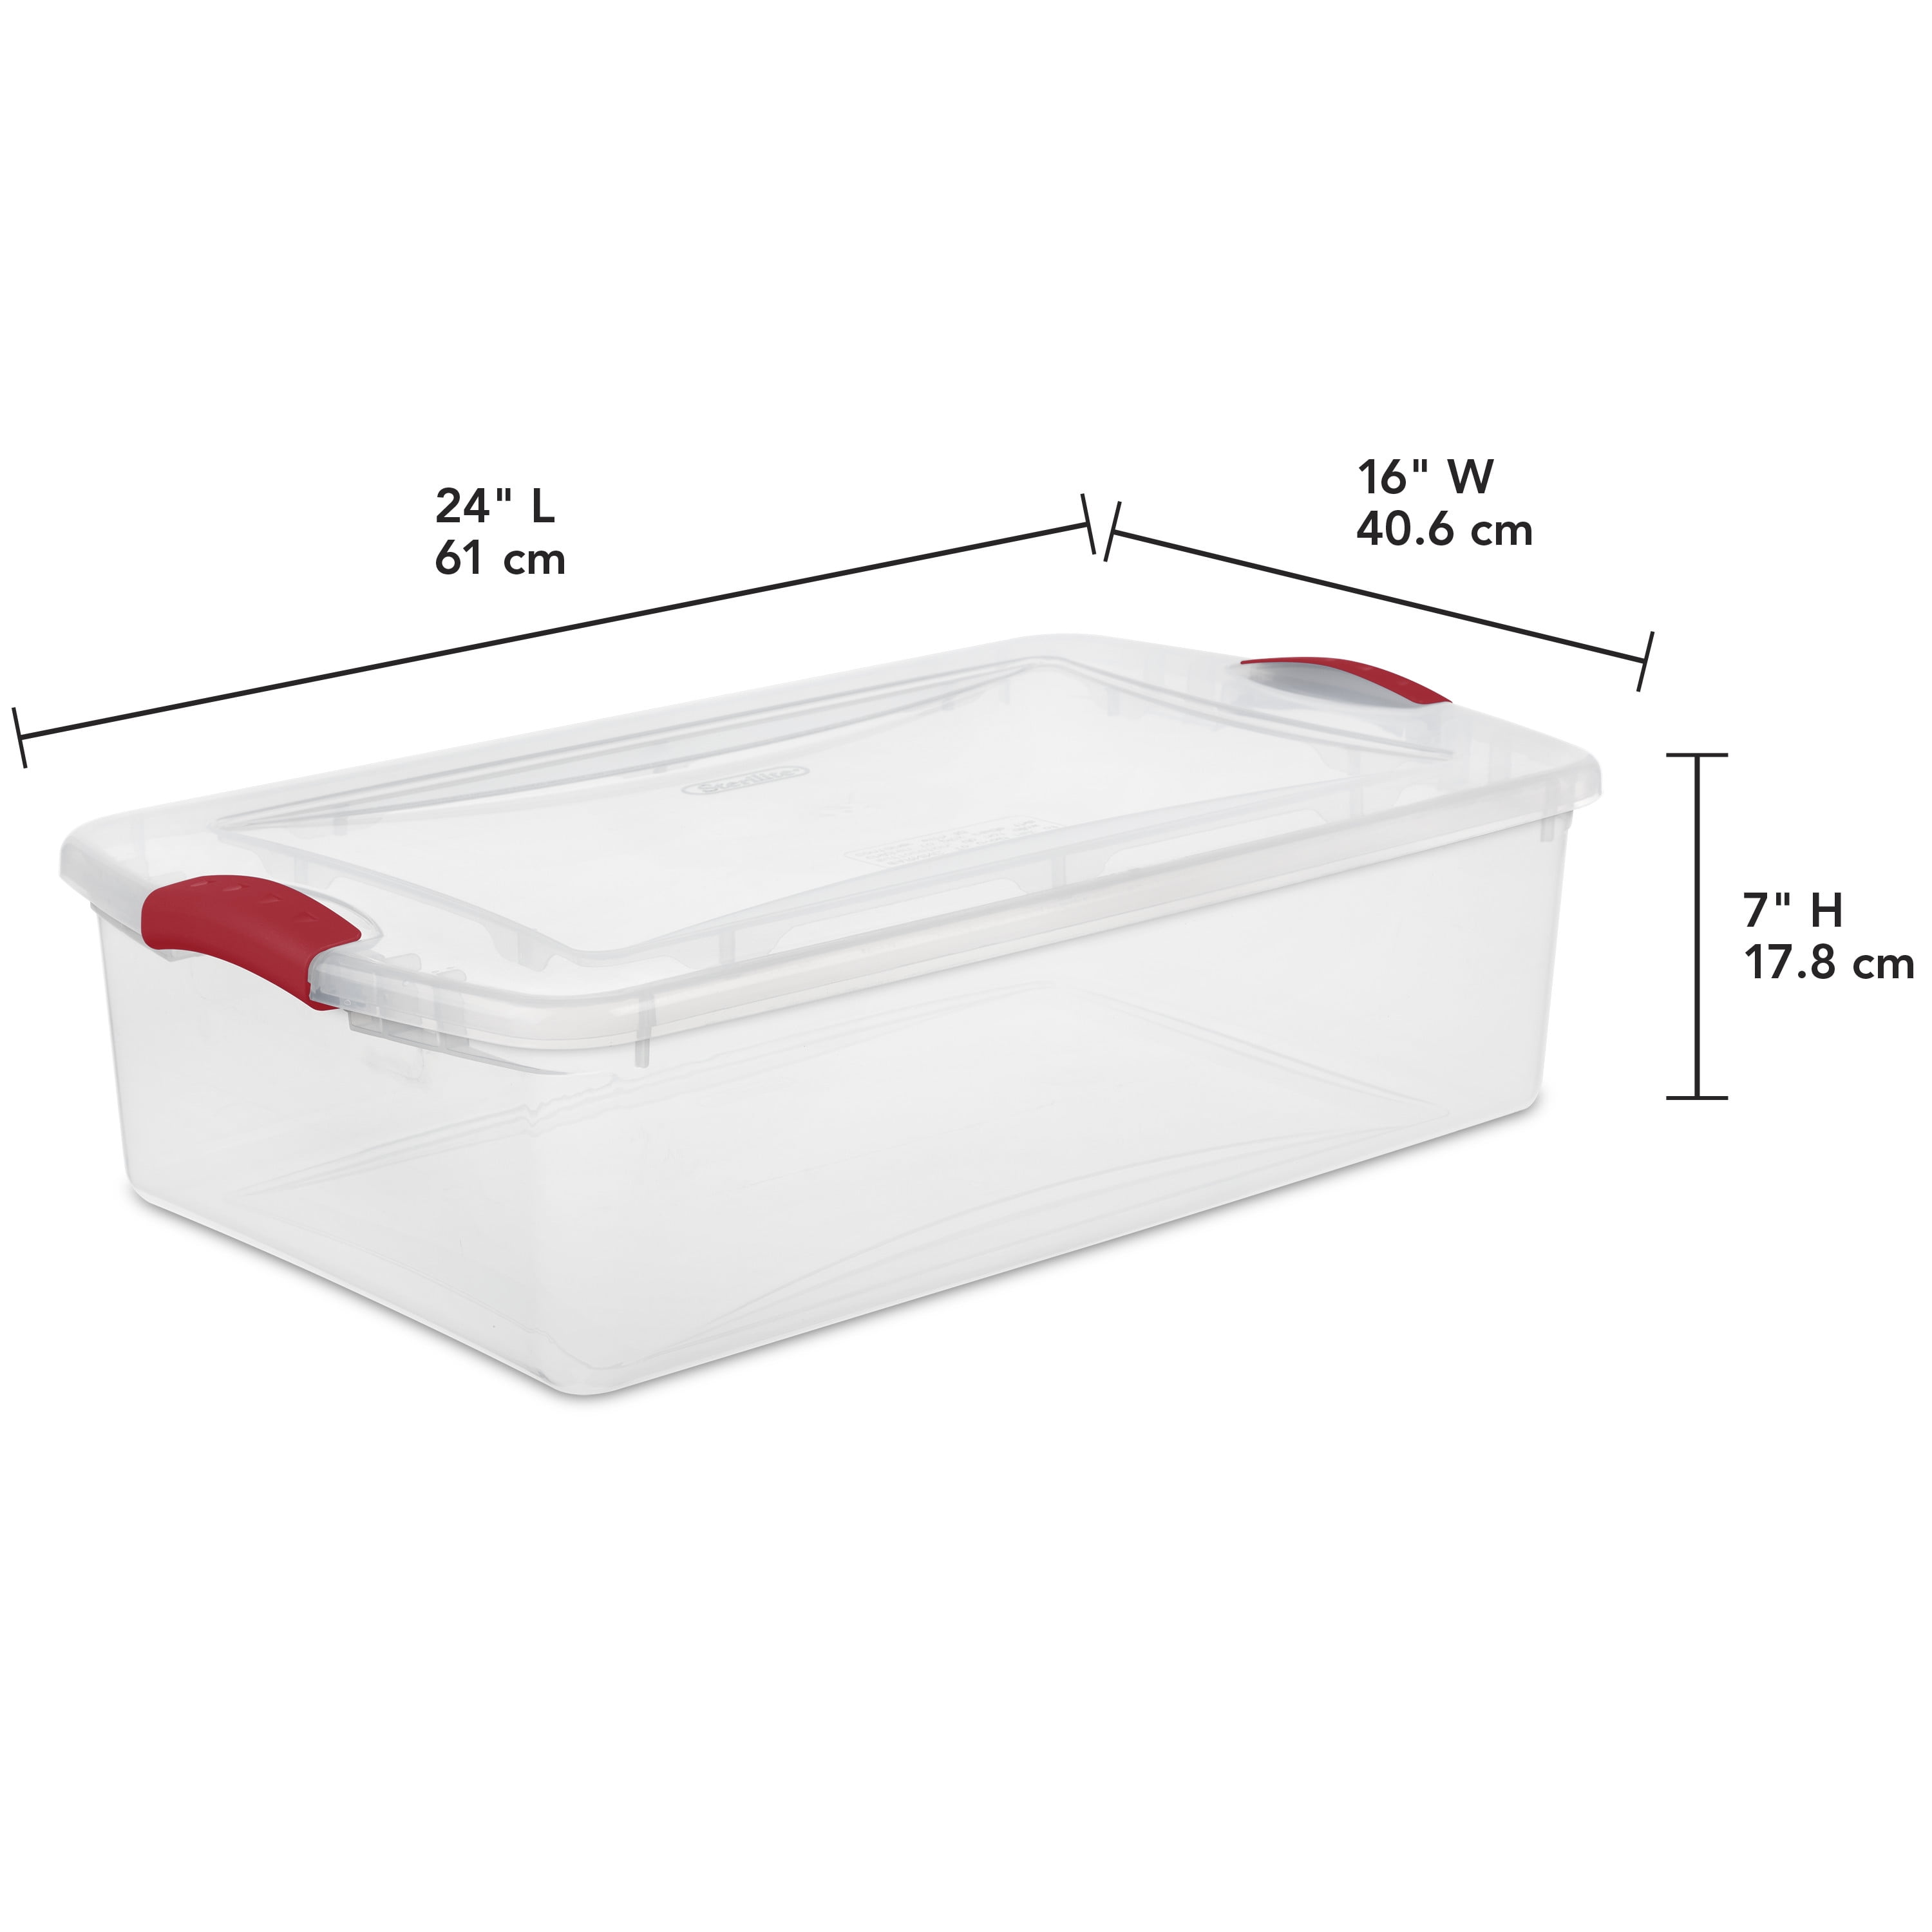 Sterilite 32 Quart Latch Box - Red Lid, 1 ct - Pay Less Super Markets